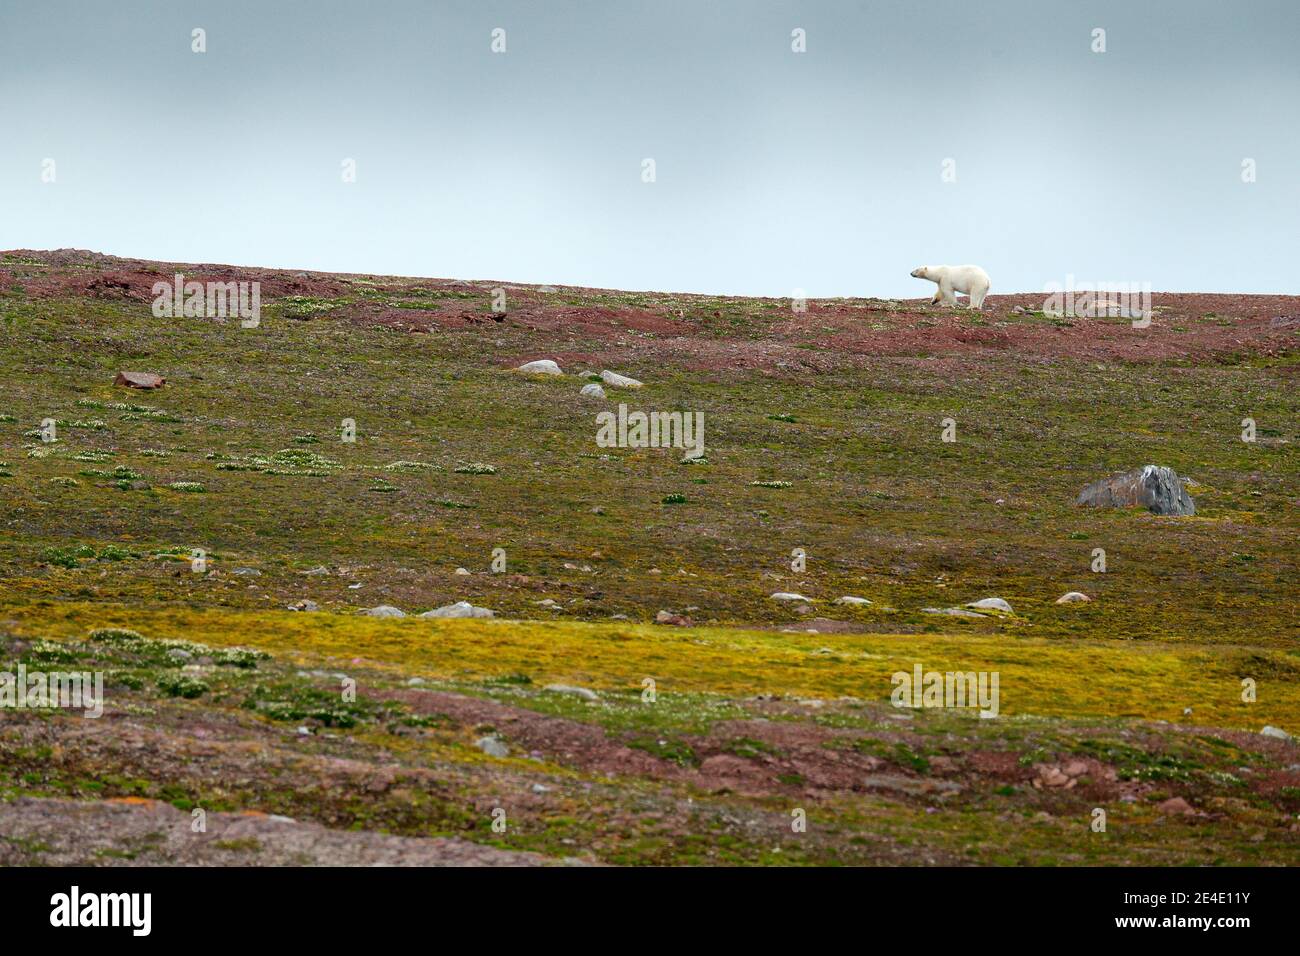 Polar bear near the bird nest, spring season with flower, Svalbard in Norway. Stock Photo